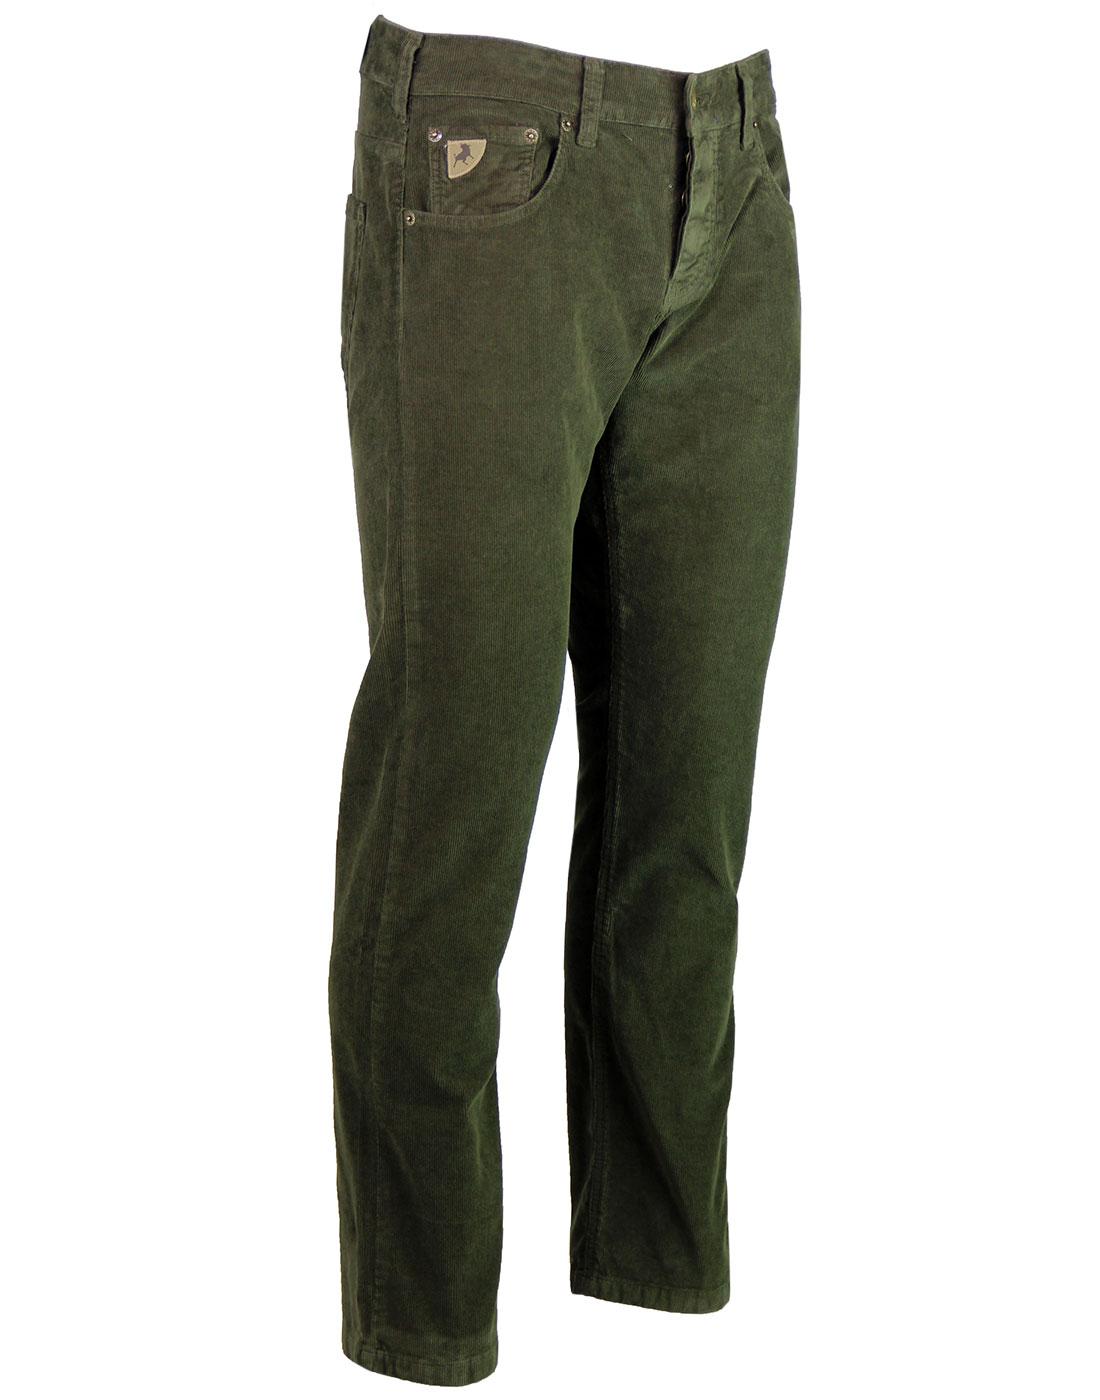 Lois Jeans Sierra Thin Corduroy Pants - Green Olive